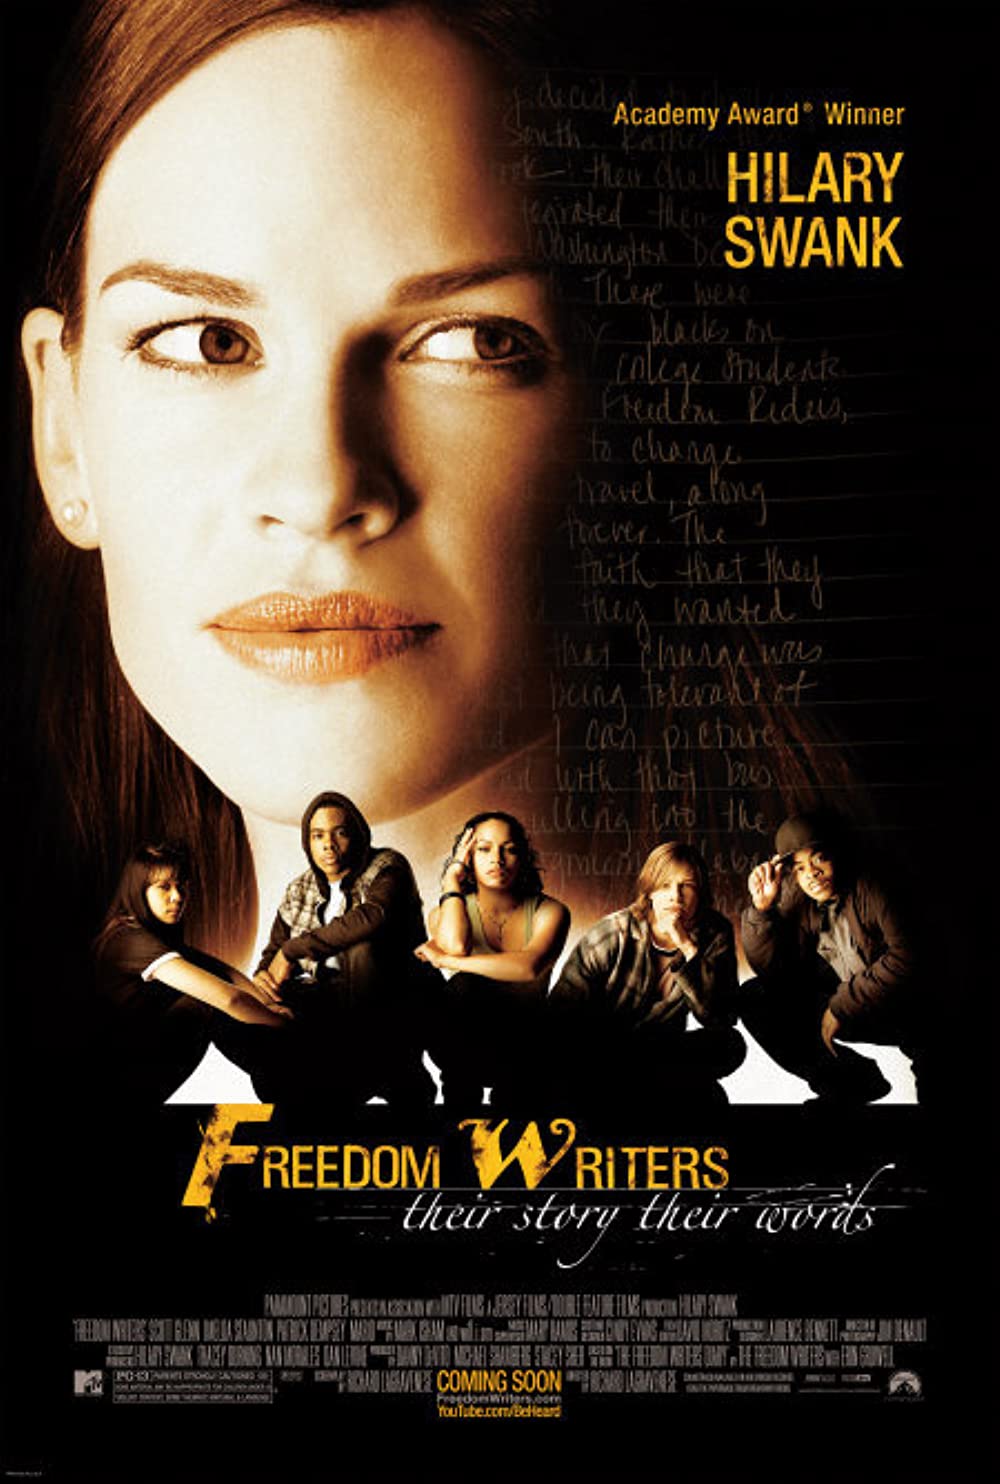 FULL MOVIE: Freedom Writers (2007)